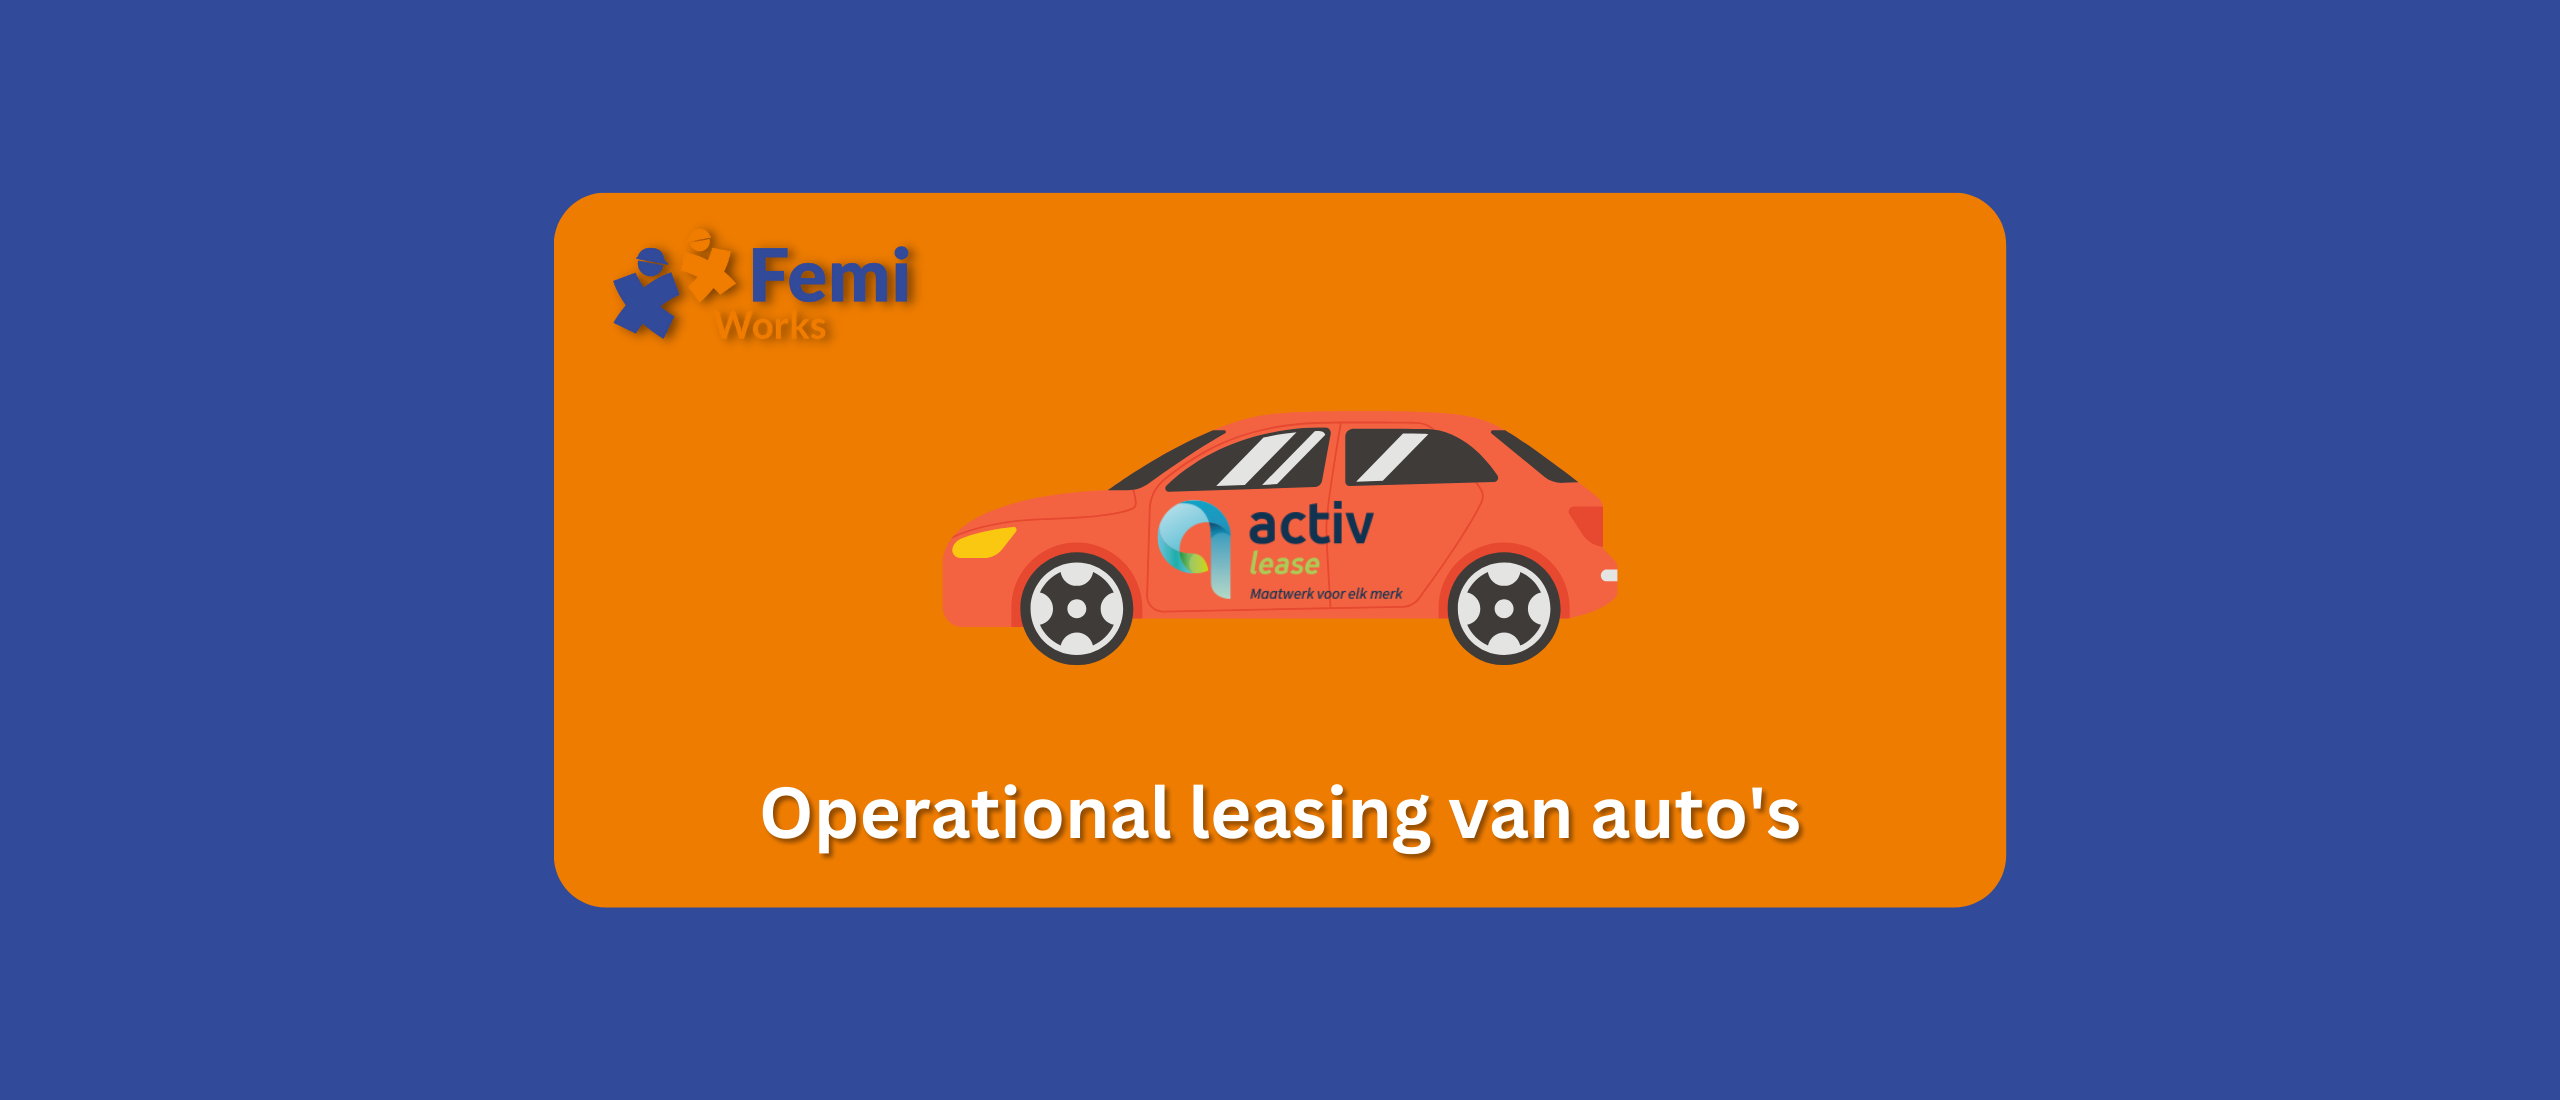 Operational leasing van auto's